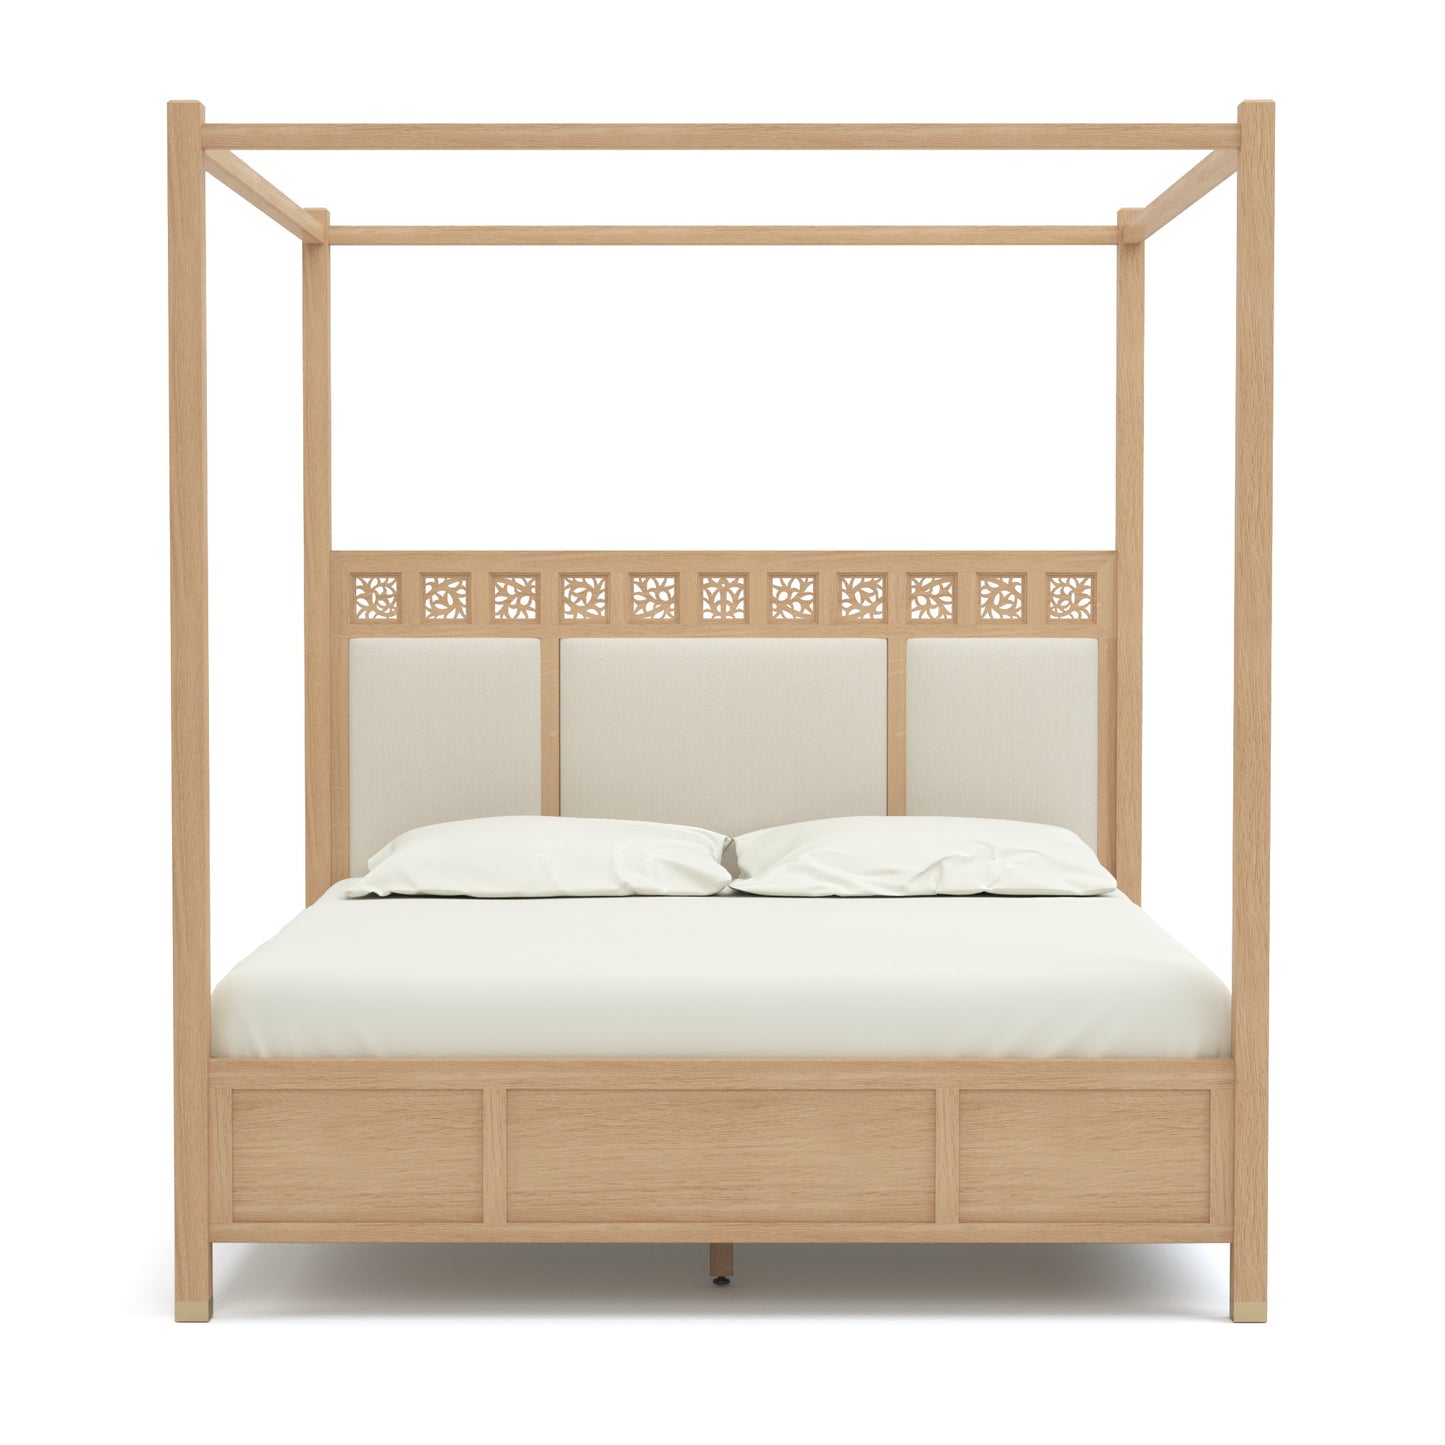 Surrey Hills Upholstered Four-Poster Bed